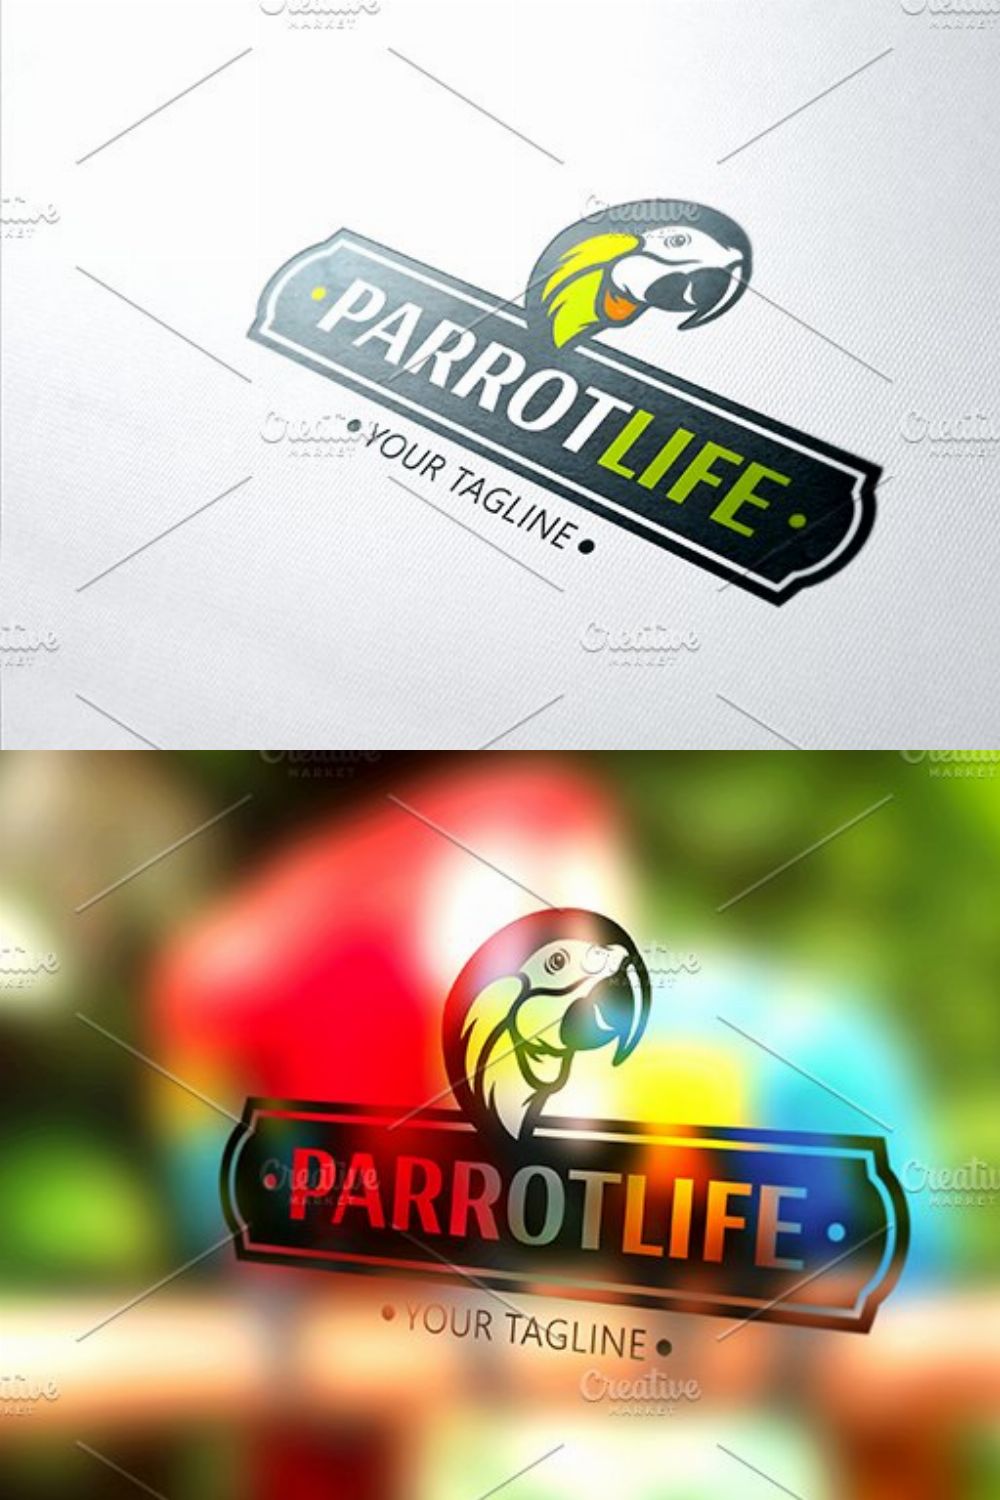 Parrot Life pinterest preview image.